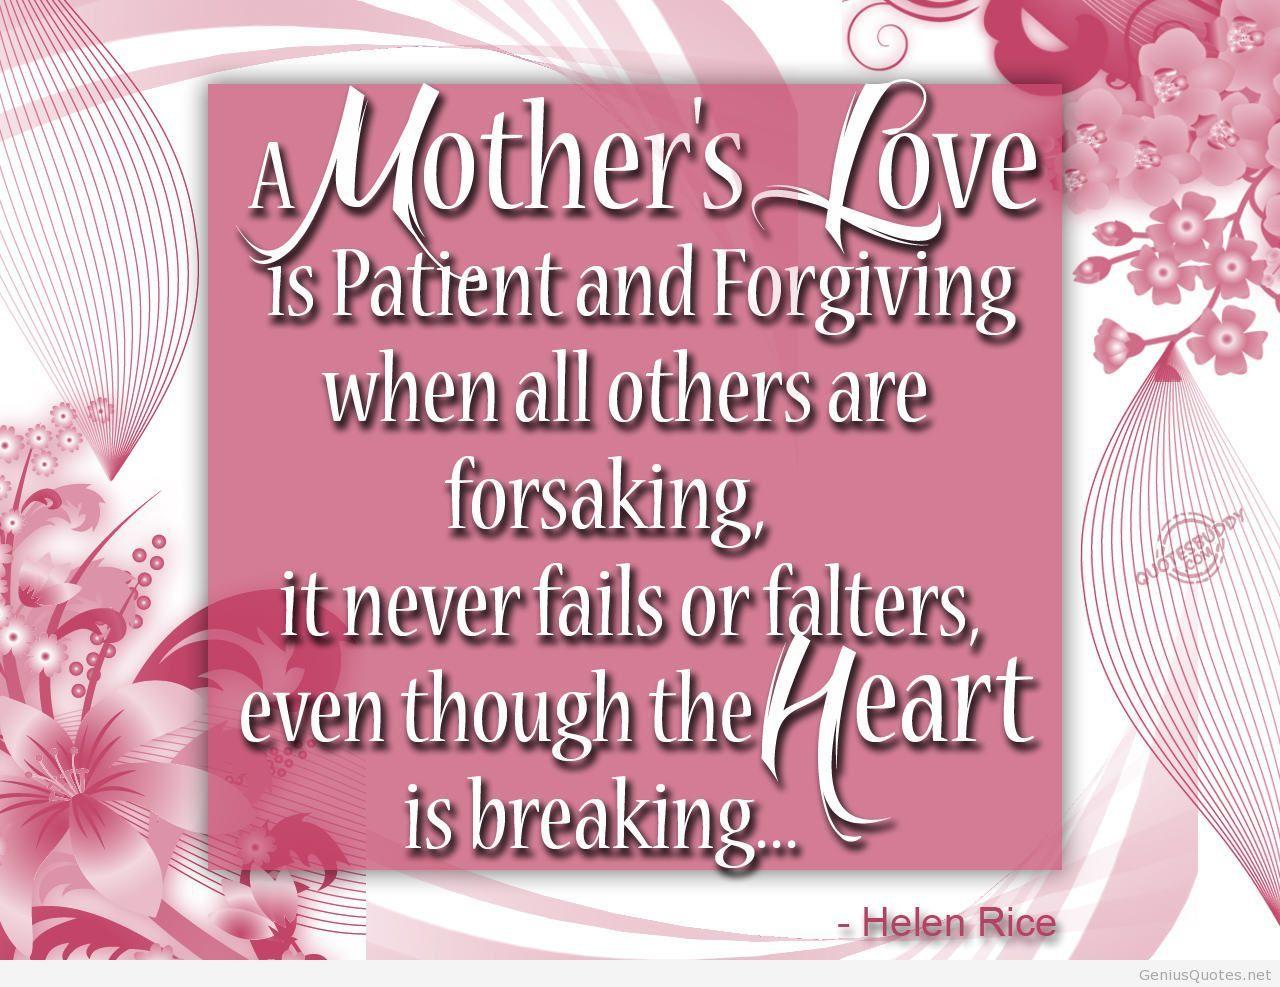 Mother love quote HD wallpaper Helen Rice